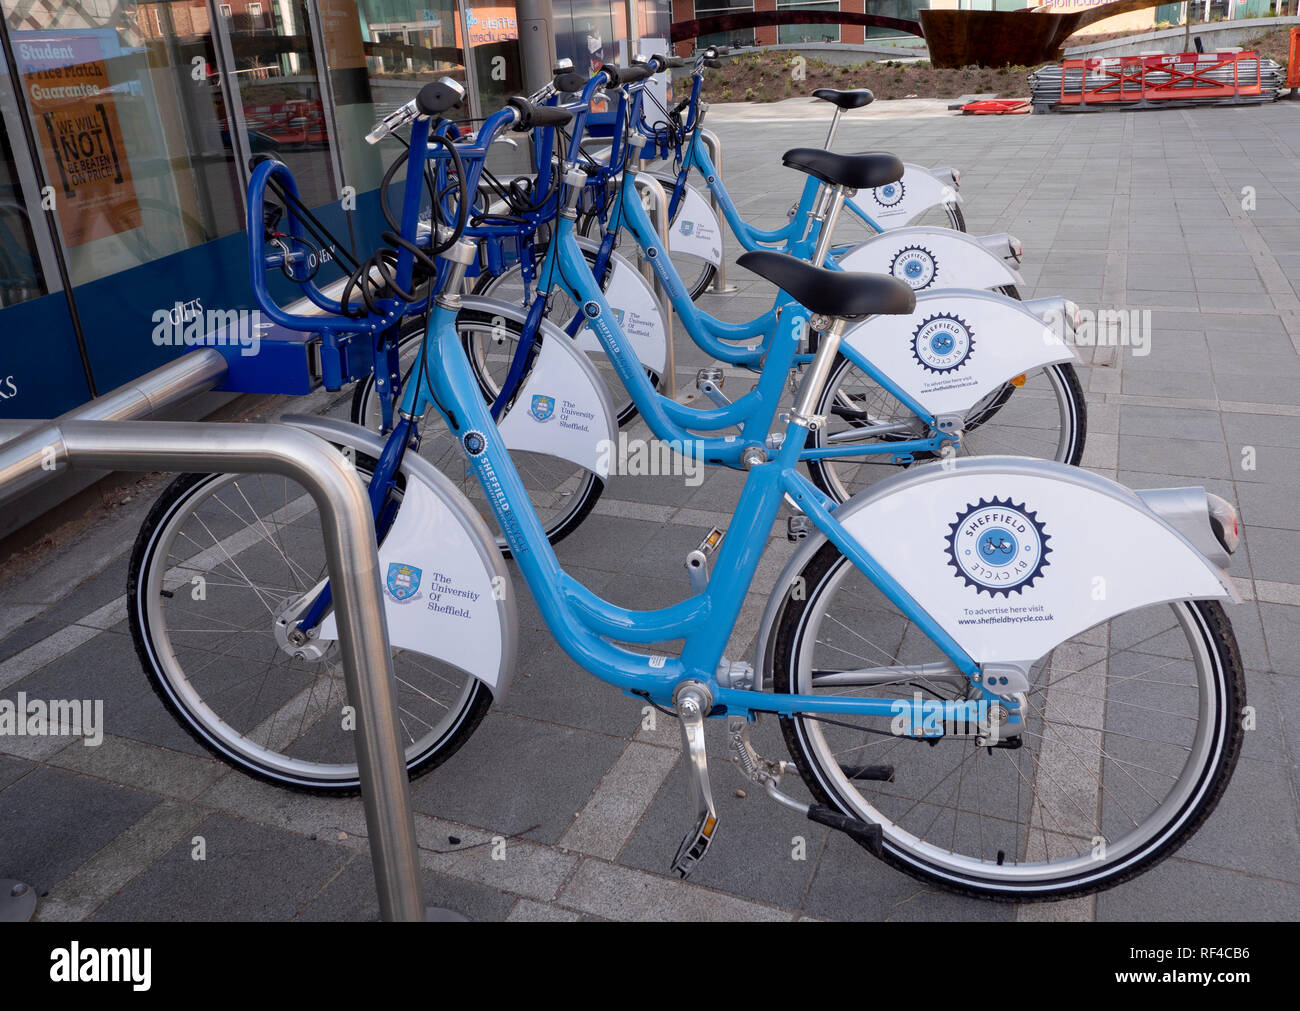 Public hire bicycles sponsored by University of Sheffield, Sheffield, South Yorkshire, England, UK. Stock Photo